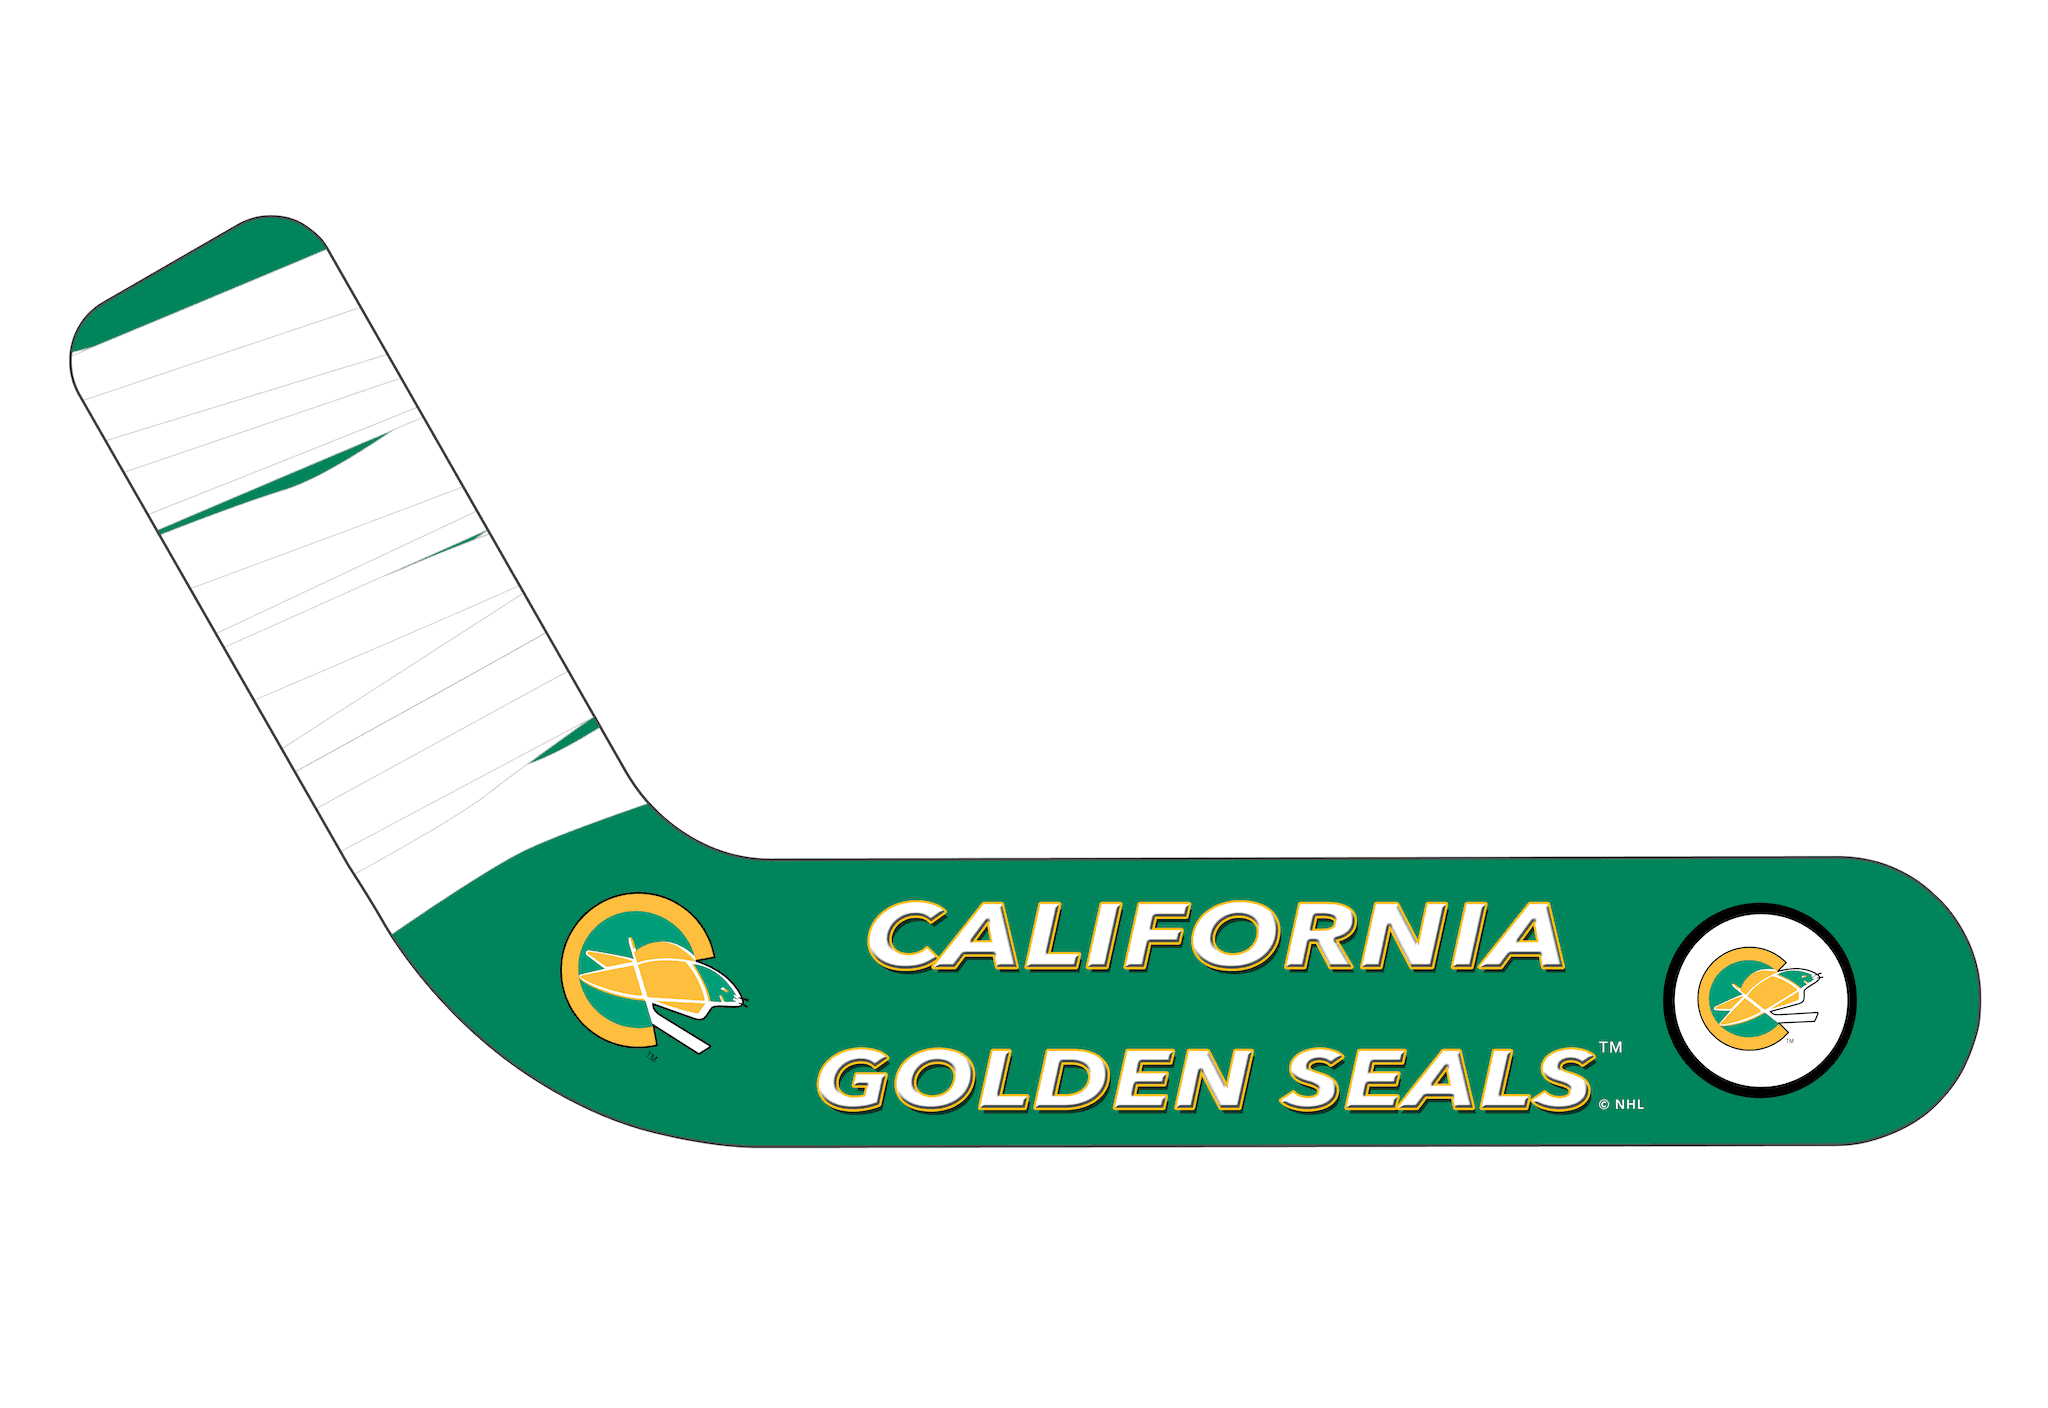 Bay Area fans still remember long-gone Golden Seals